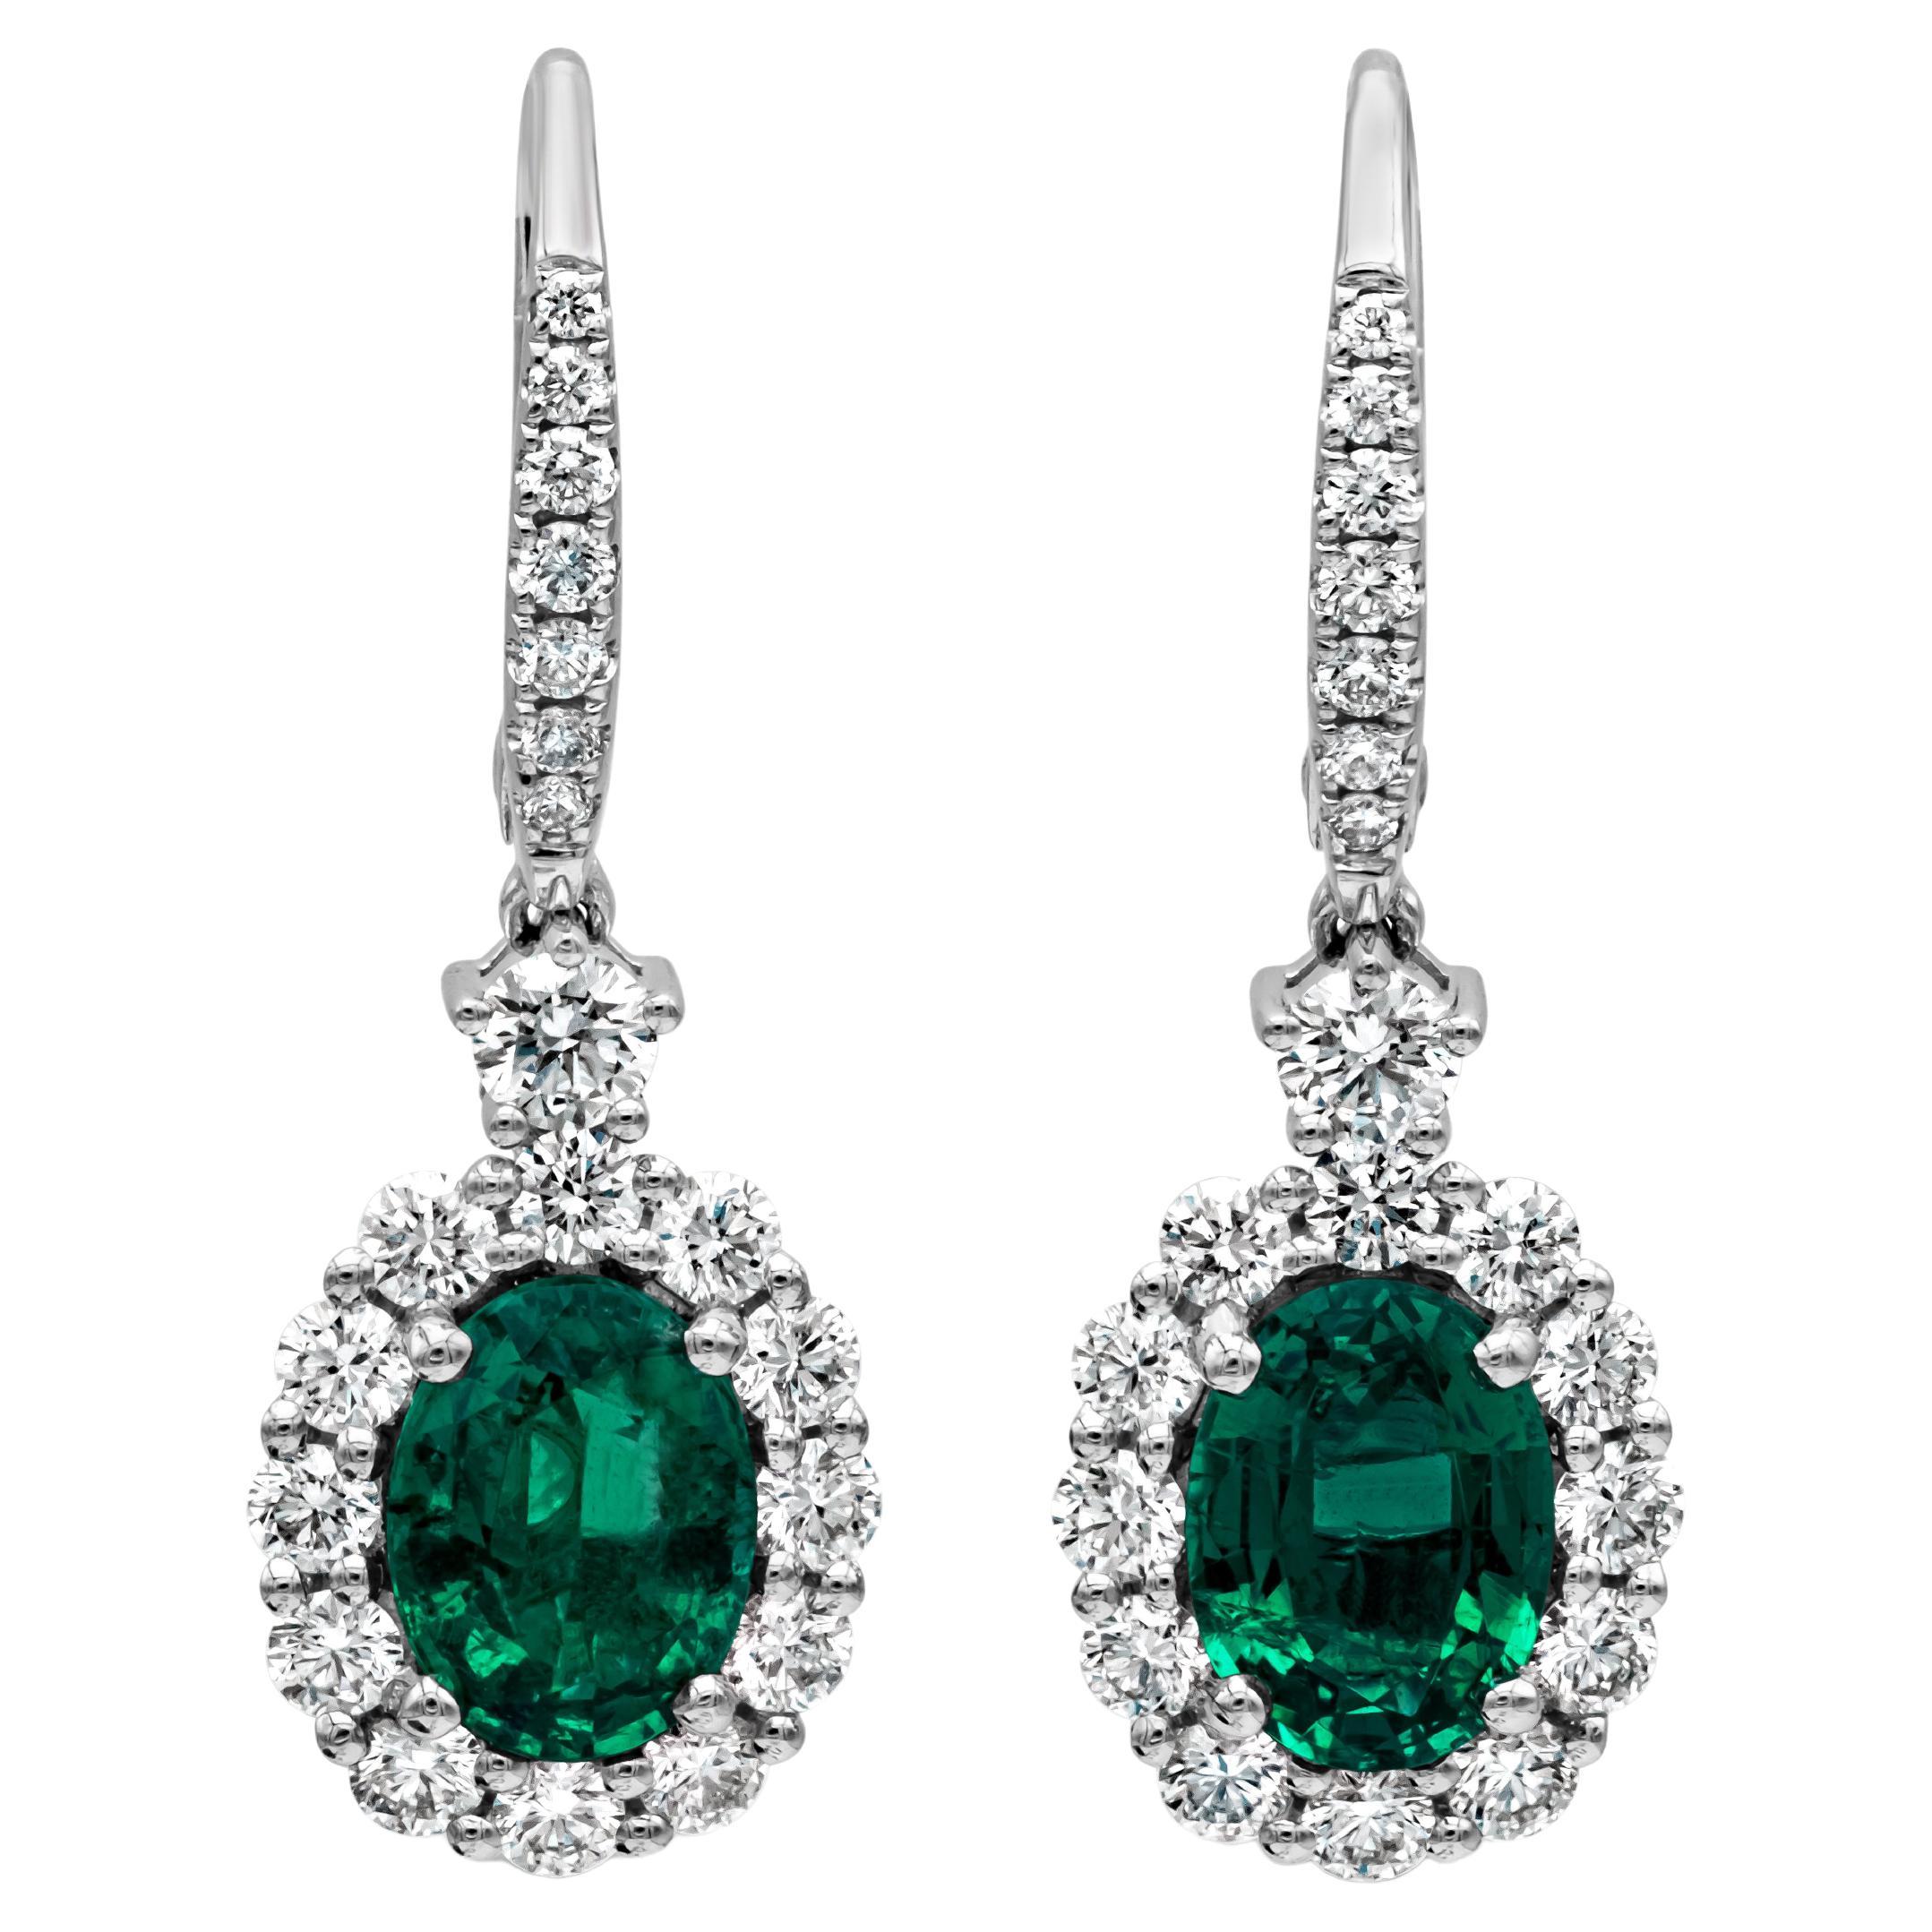  2.18 Carat Oval Emerald and Diamond Halo Dangle Earrings